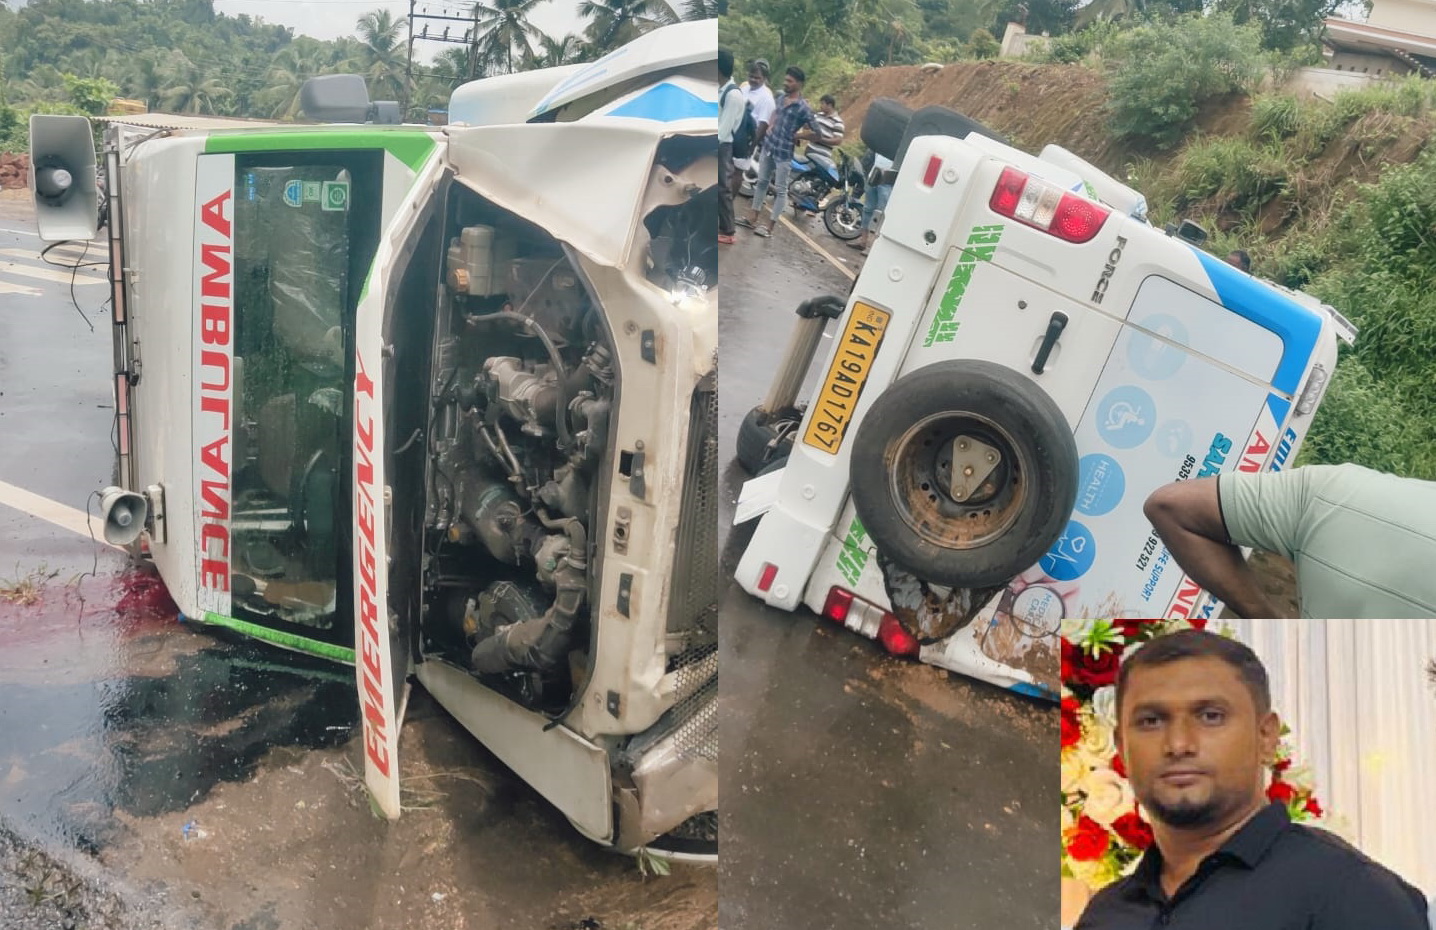 Ambulance driver loses life in tragic accident near Mangalore